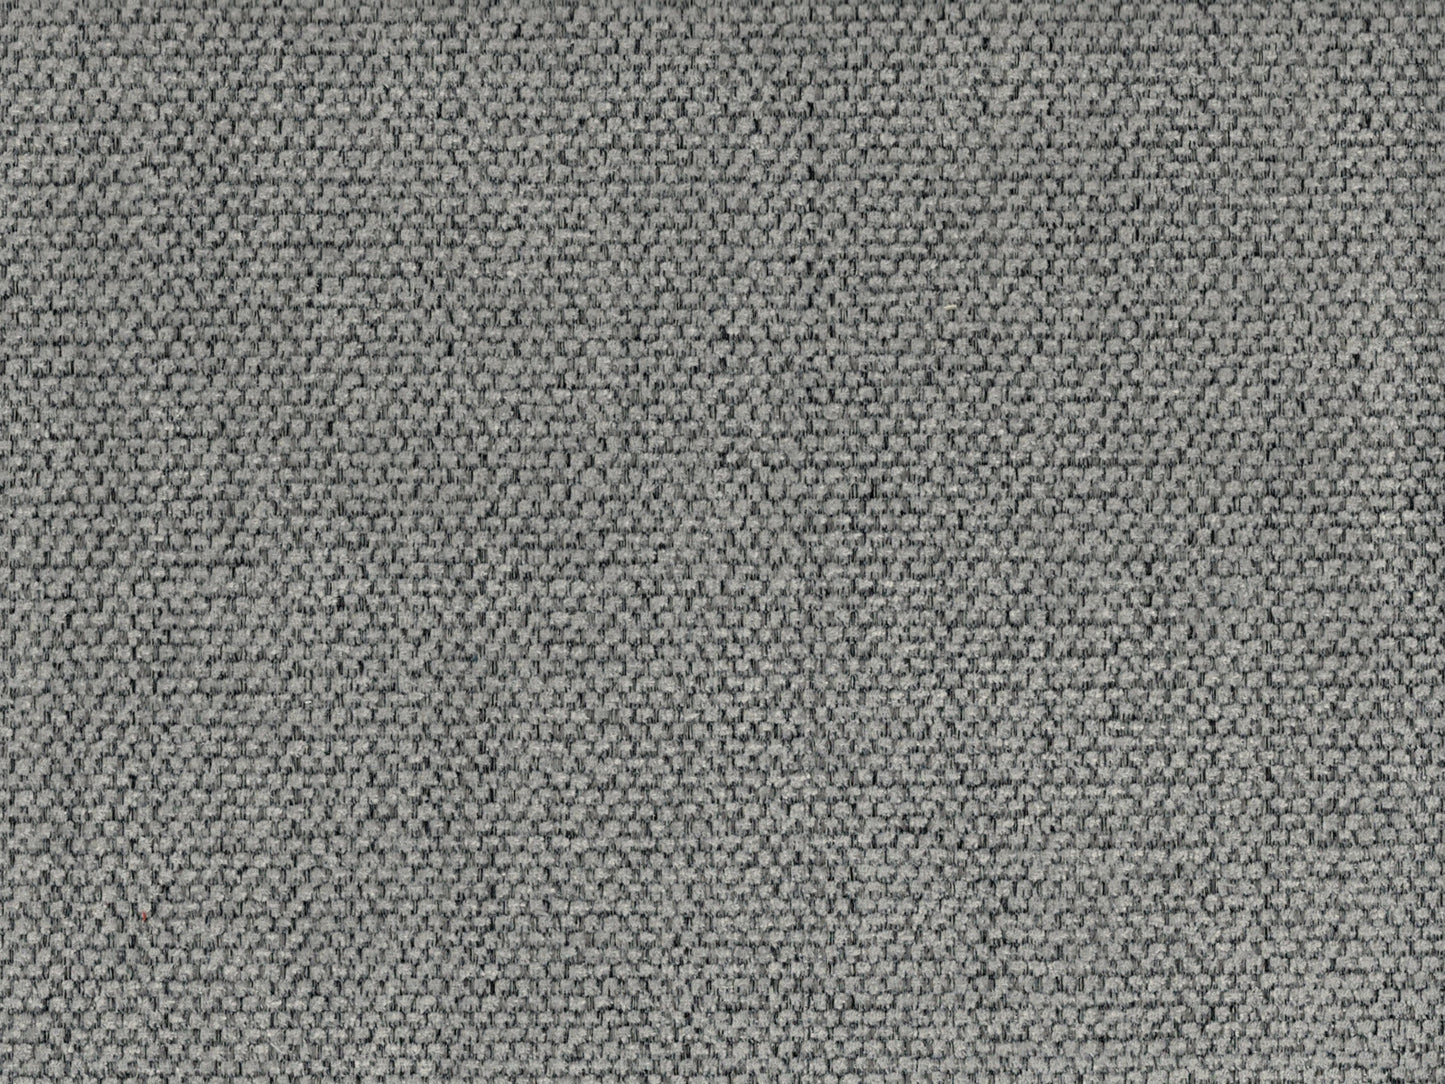 Bergamo Fabric Samples - Rydan Interiors